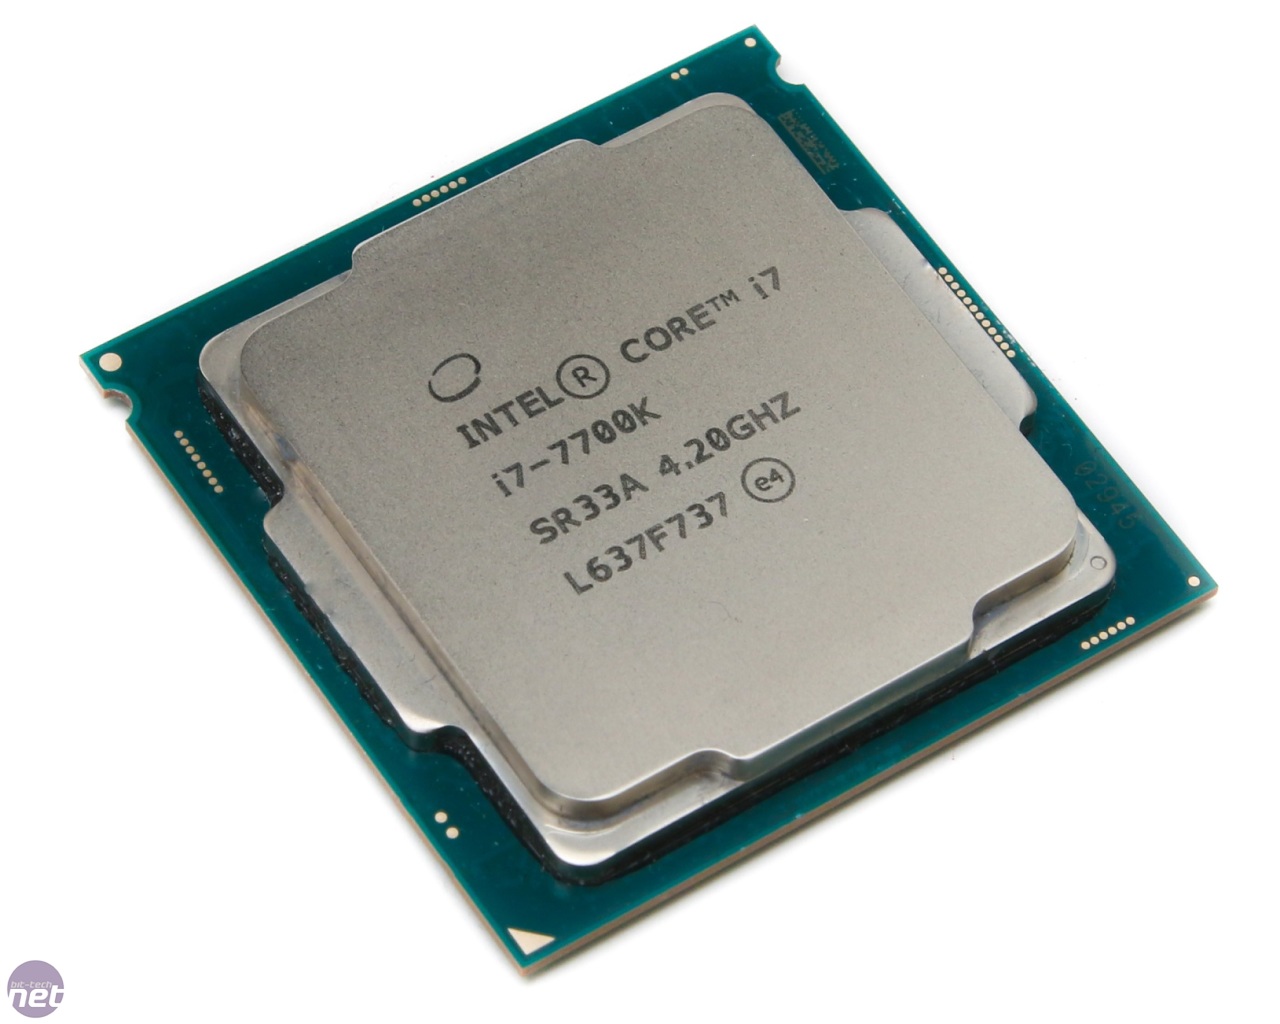 Intel Core i7-7700K, Core i5-7600K (Kaby Lake) and Z270 Chipset 